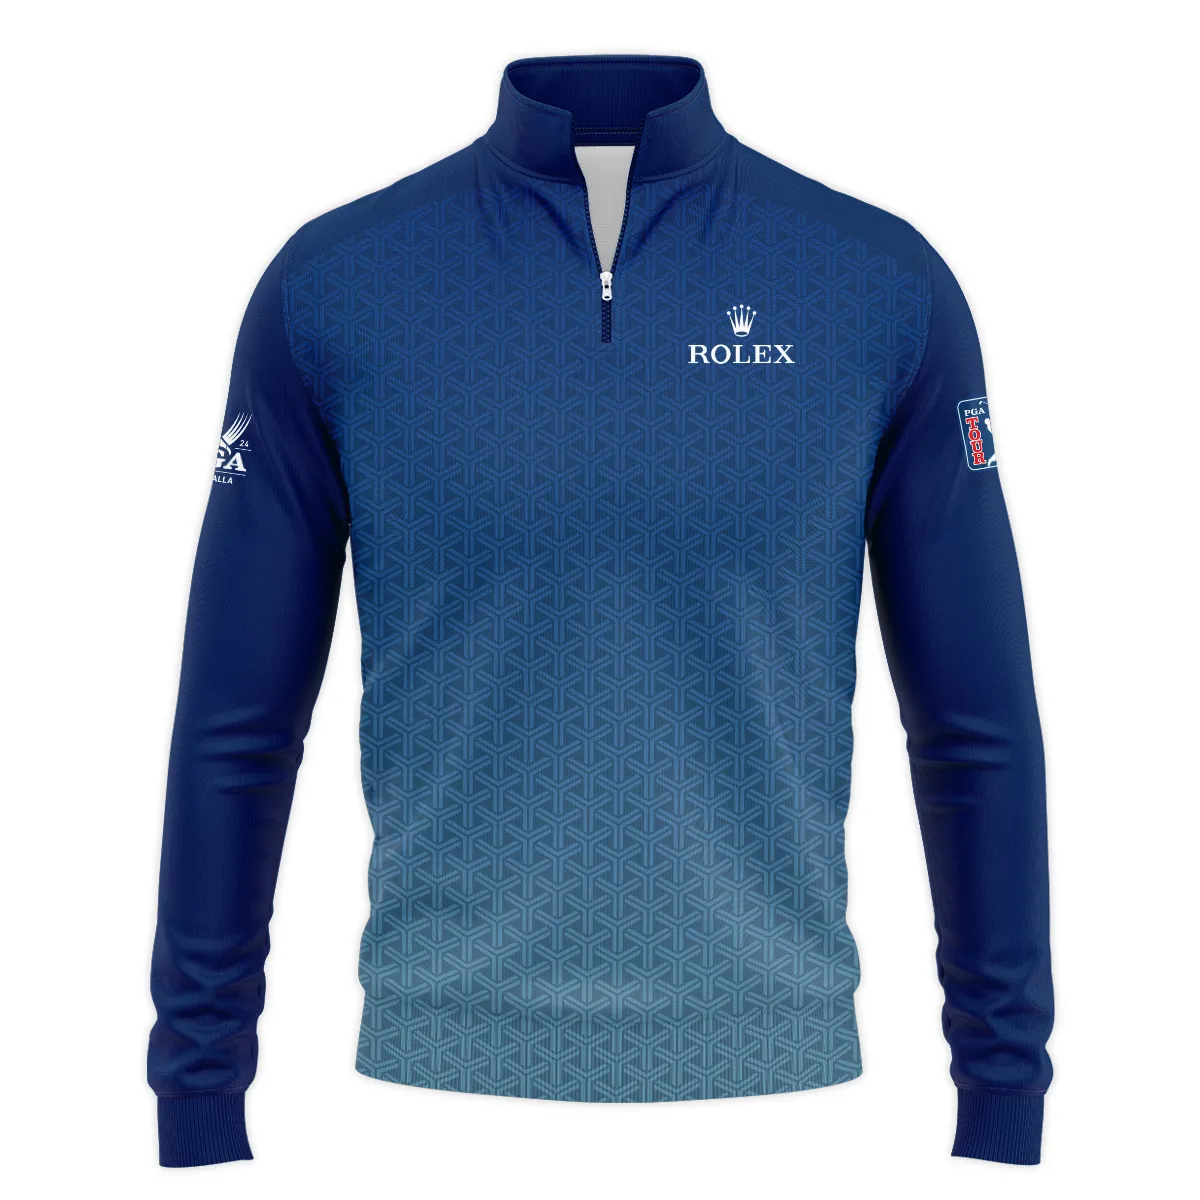 Golf Sport Pattern Blue Sport Uniform 2024 PGA Championship Valhalla Rolex Quarter-Zip Polo Shirt